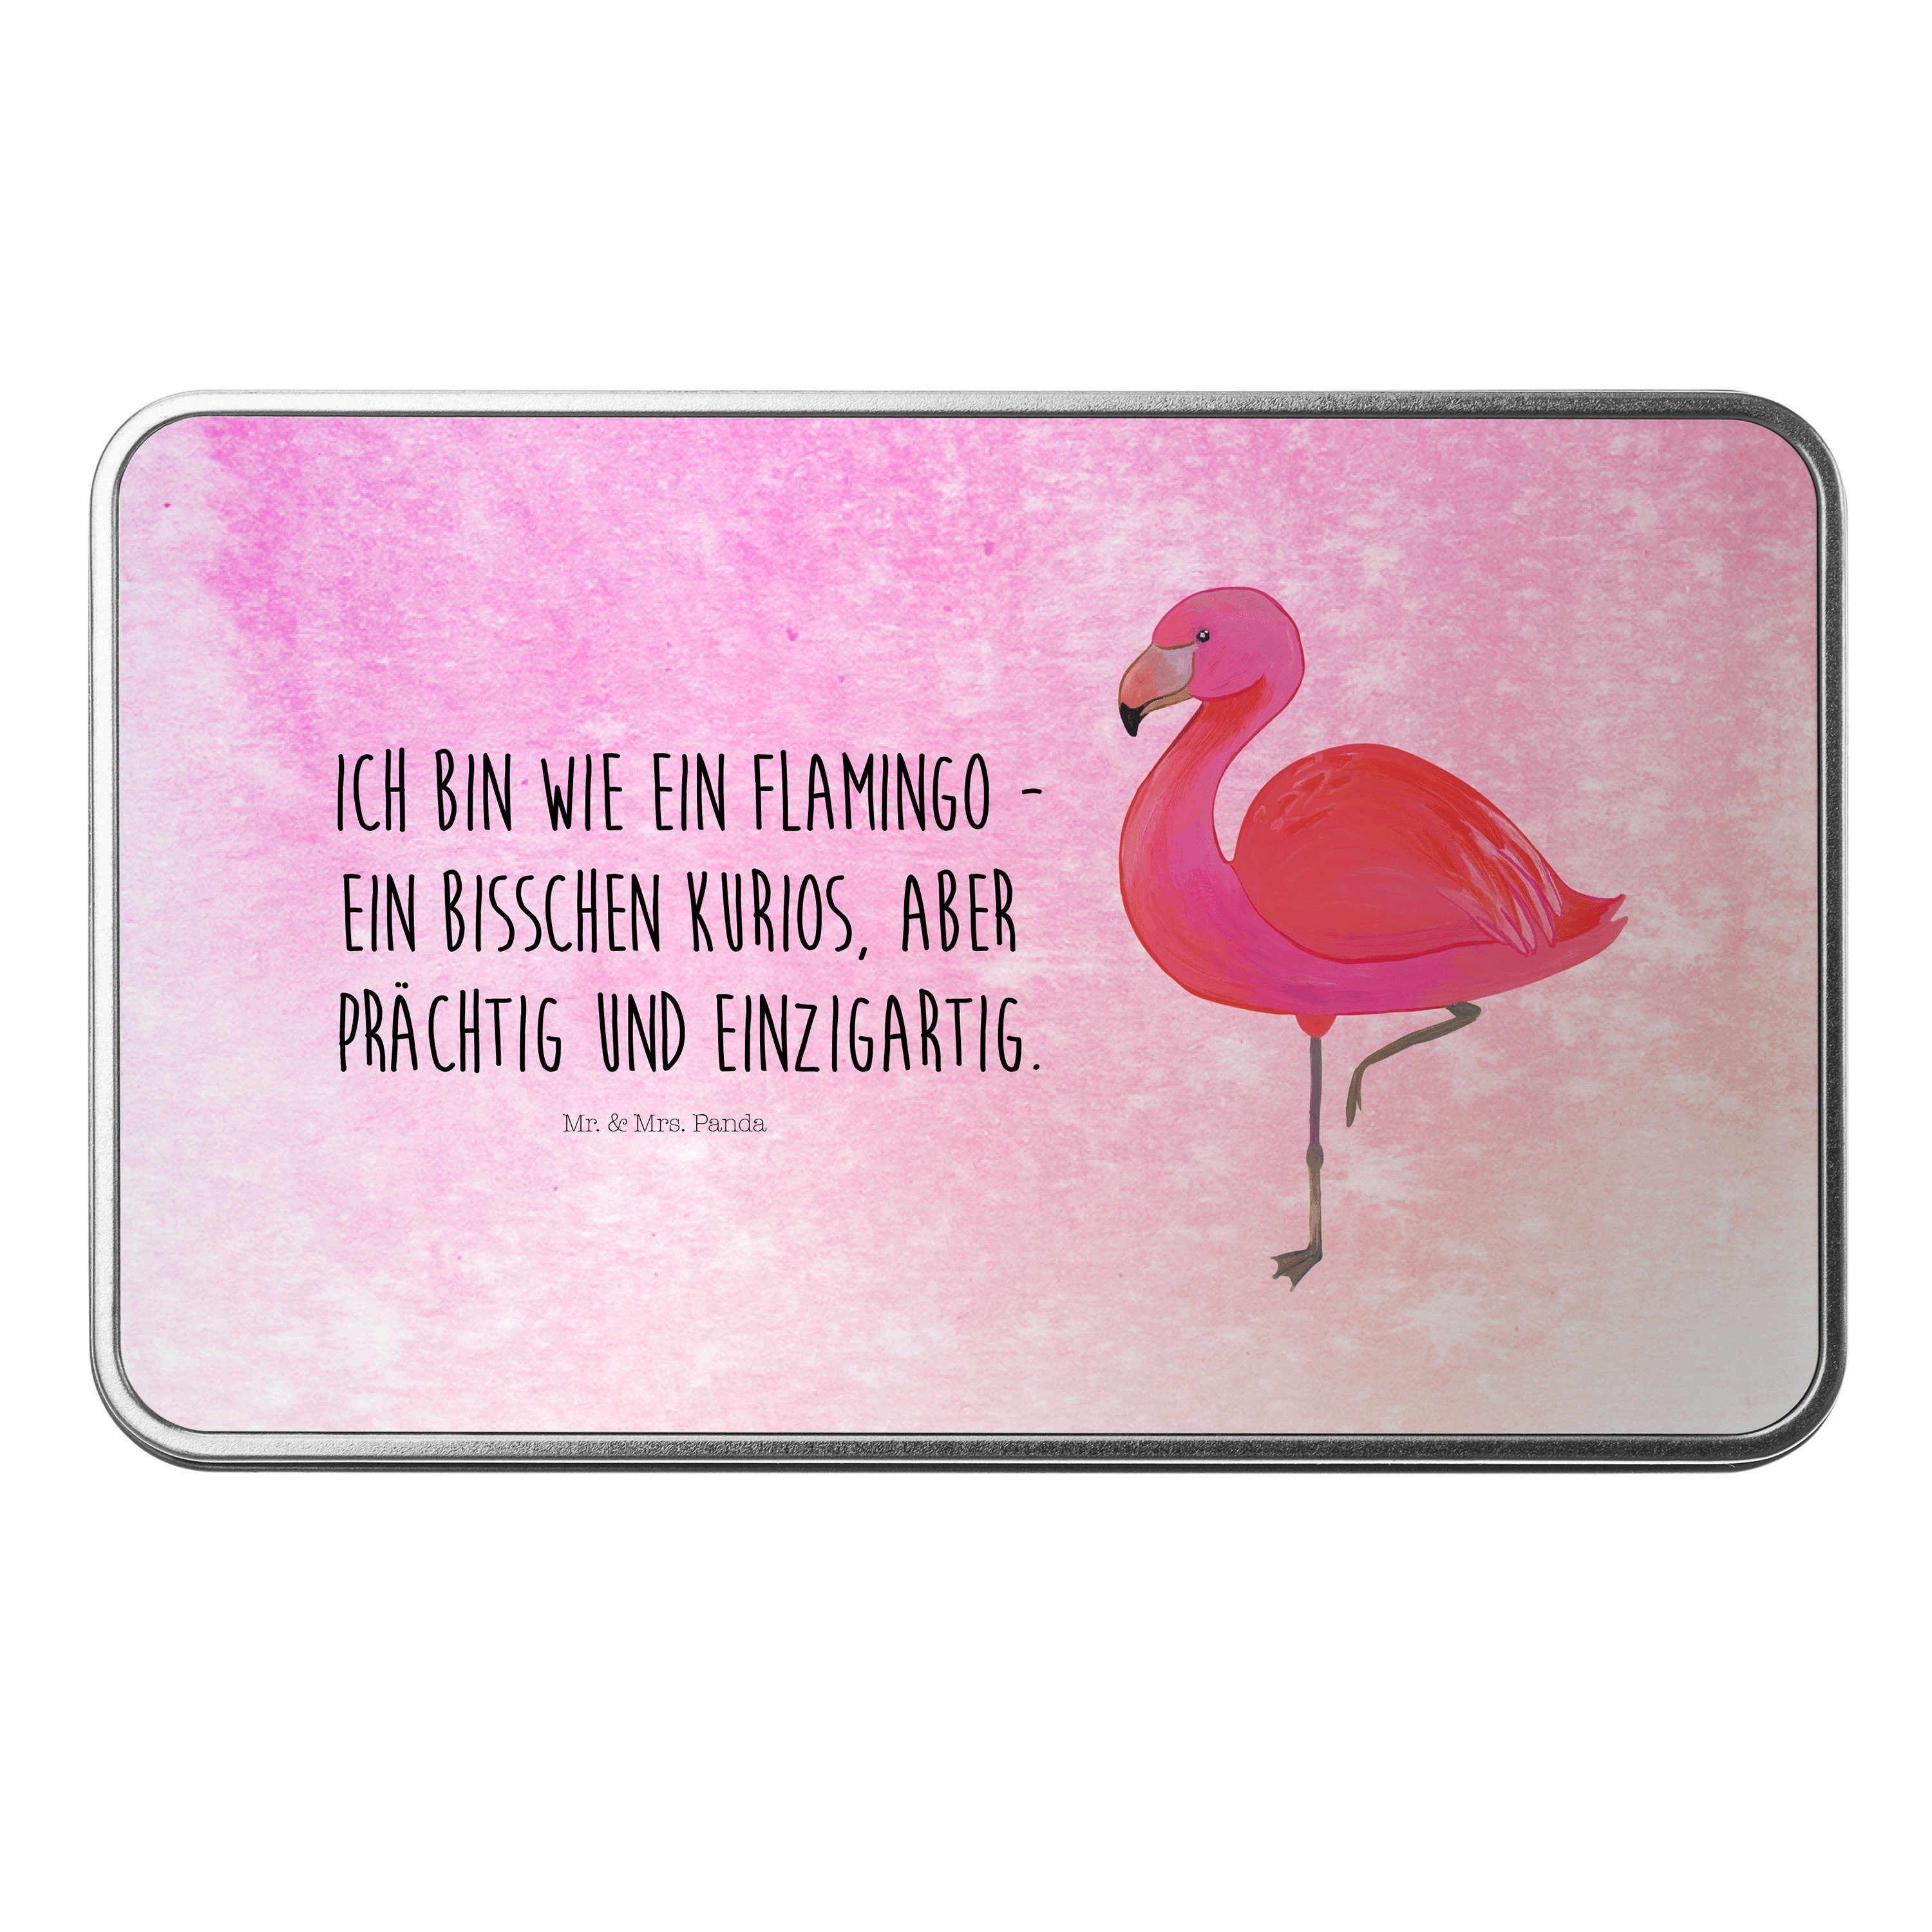 & Metalldose, Mrs. Vorratsbox, Mr. classic - Aquarell St) - Flamingo Pink Geschenk, (1 Panda Dose